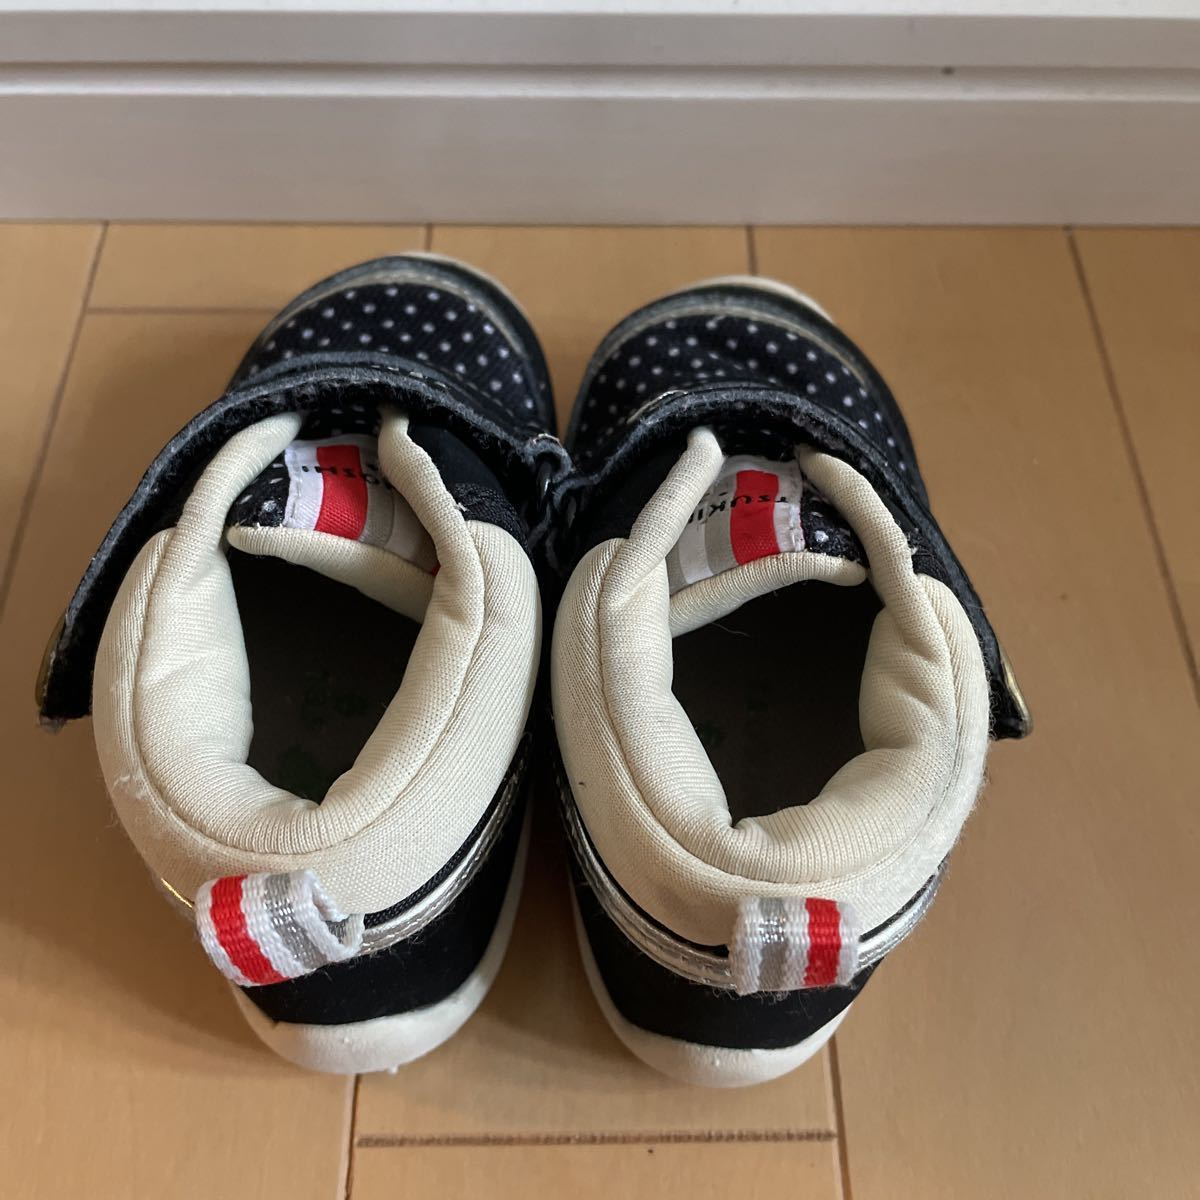 TSUKIHOSHI moonstar moon Star baby shoes sport shoes Kids sneakers 13.5cm black dot polka dot man and woman use postage 350 jpy ~